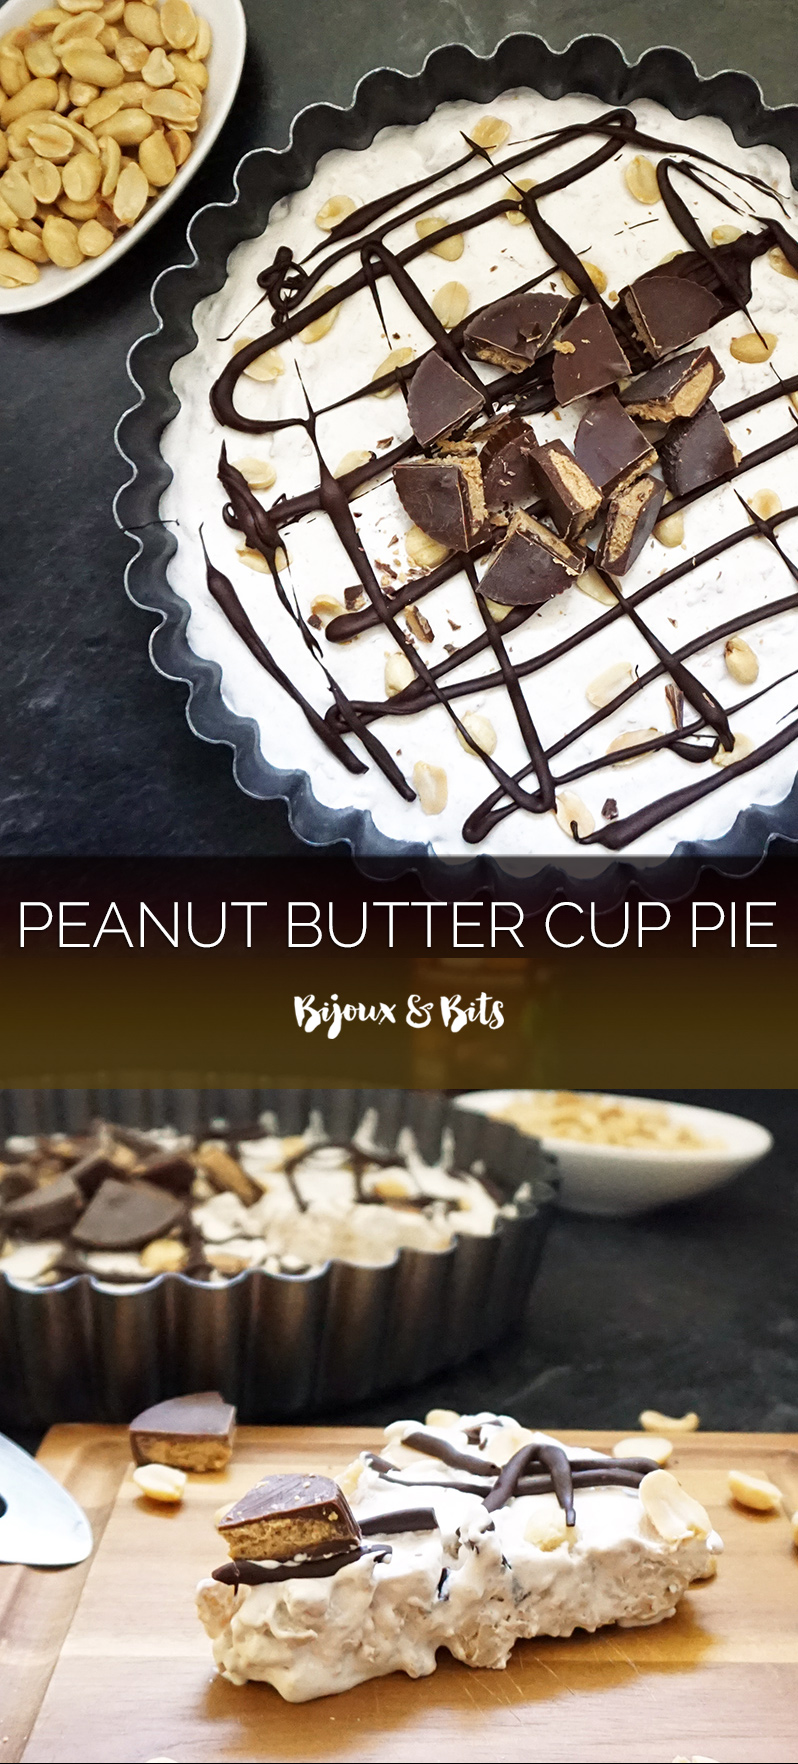 Peanut butter cup pie from @bijouxandbits #pie #nobake